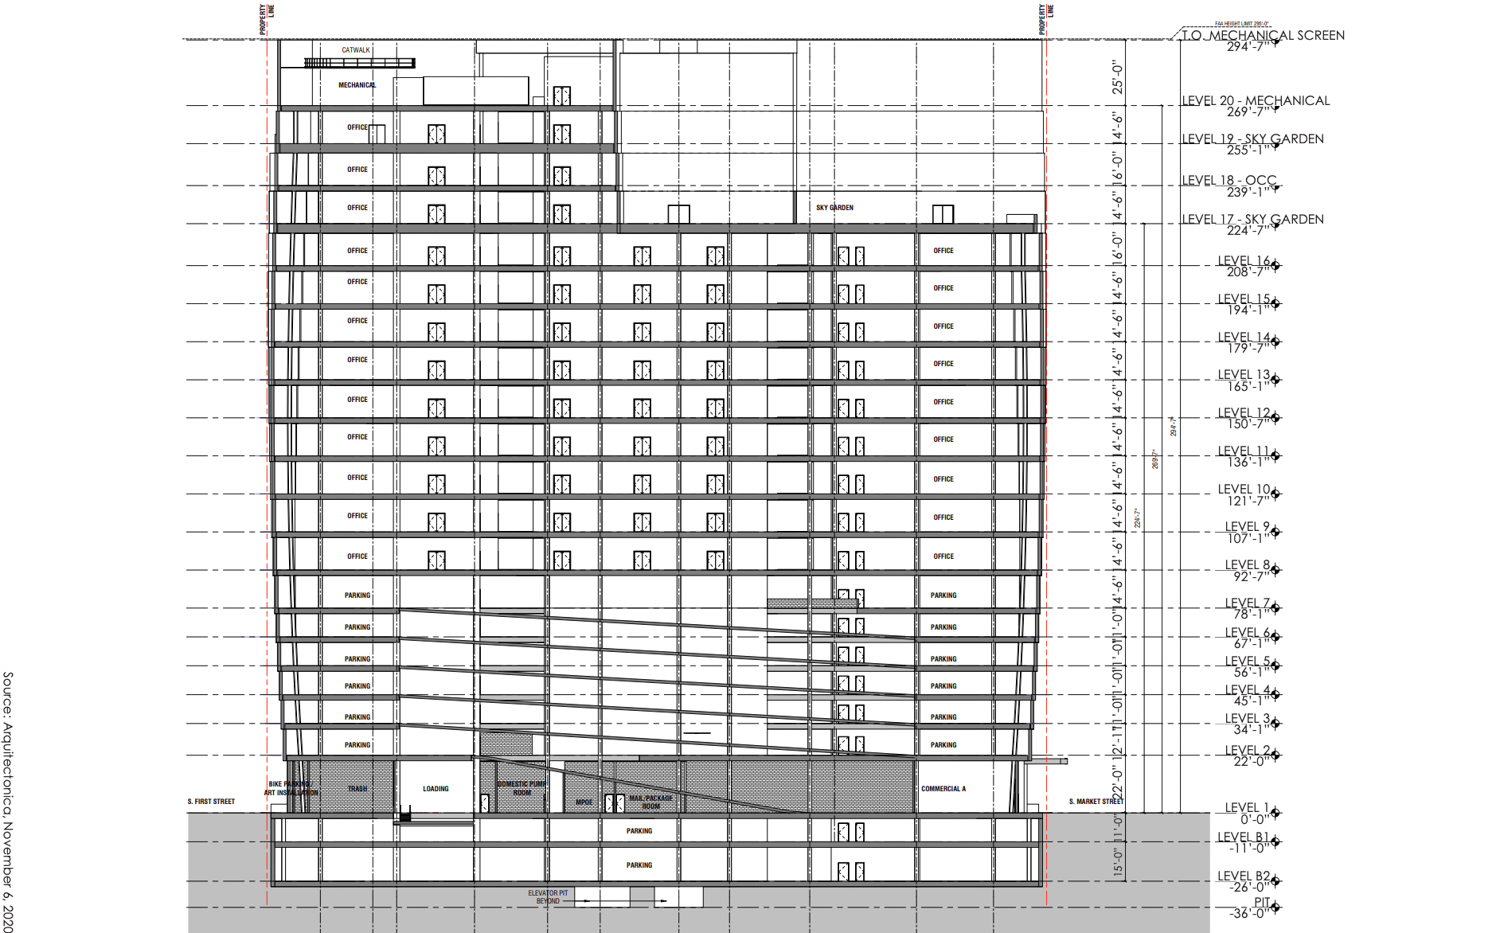 282 South Market Street elevation, drawing courtesy EIR documents